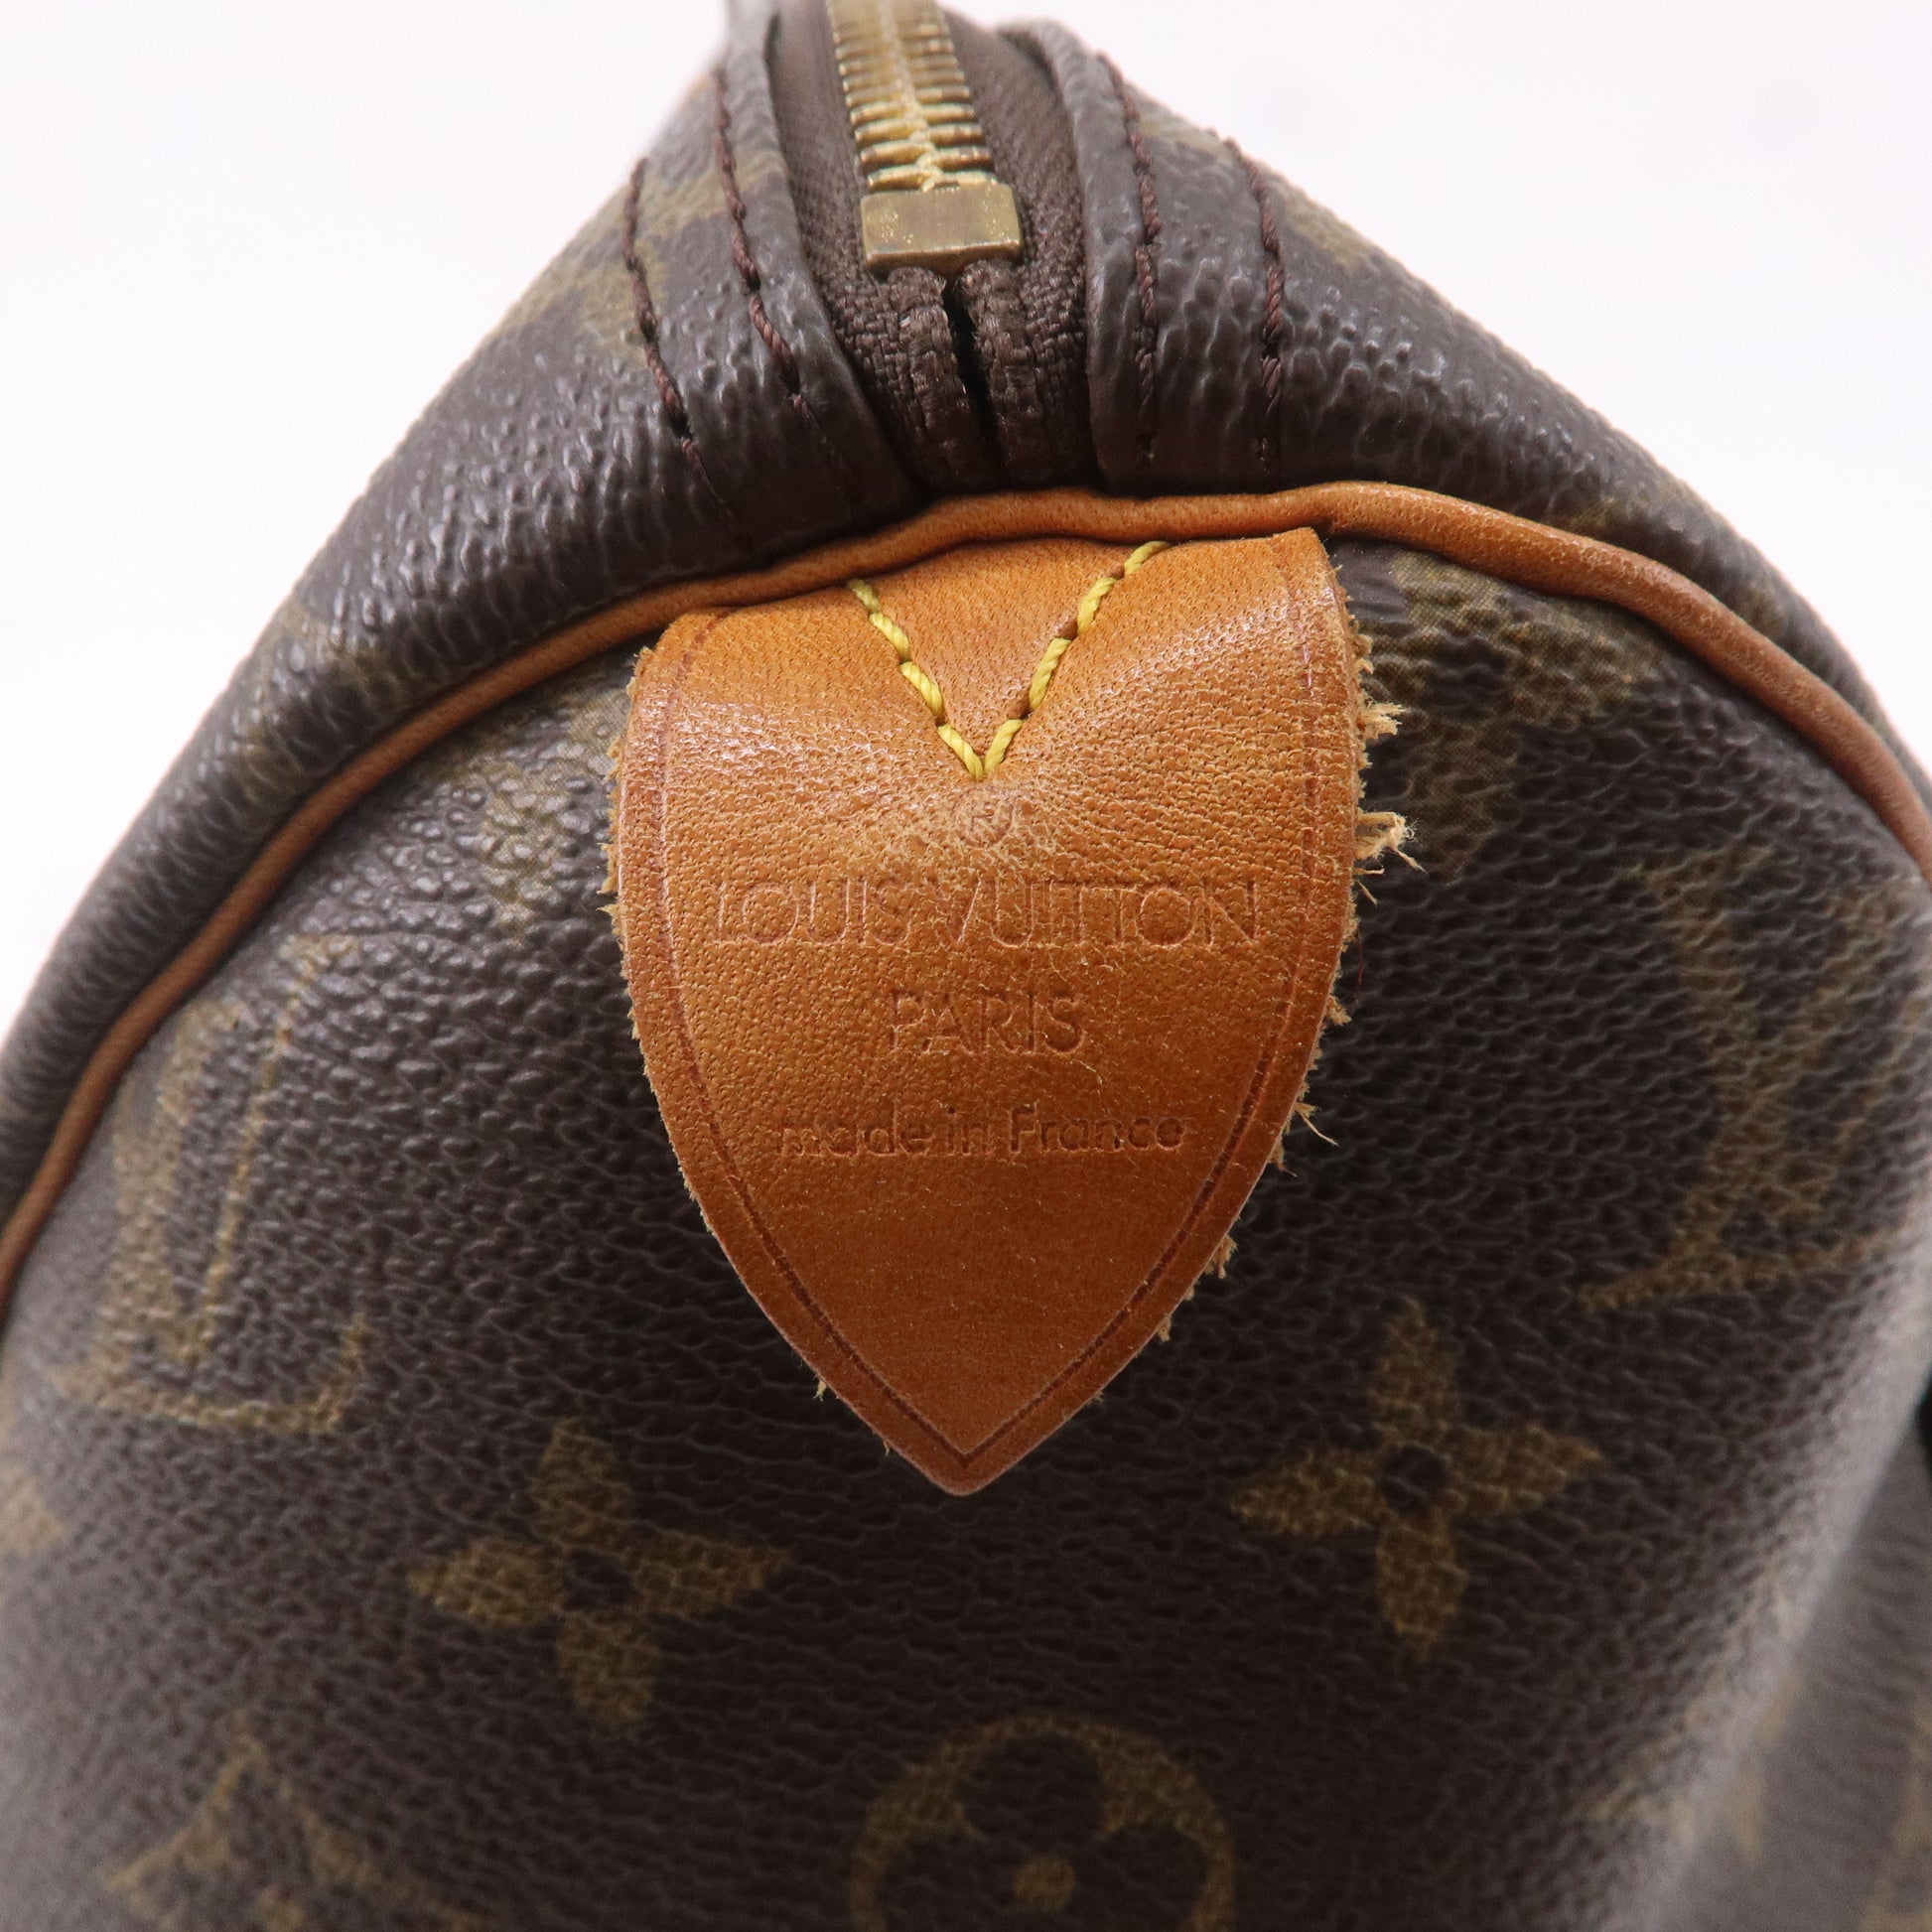 Louis Vuitton Speedy 40 - Good or Bag